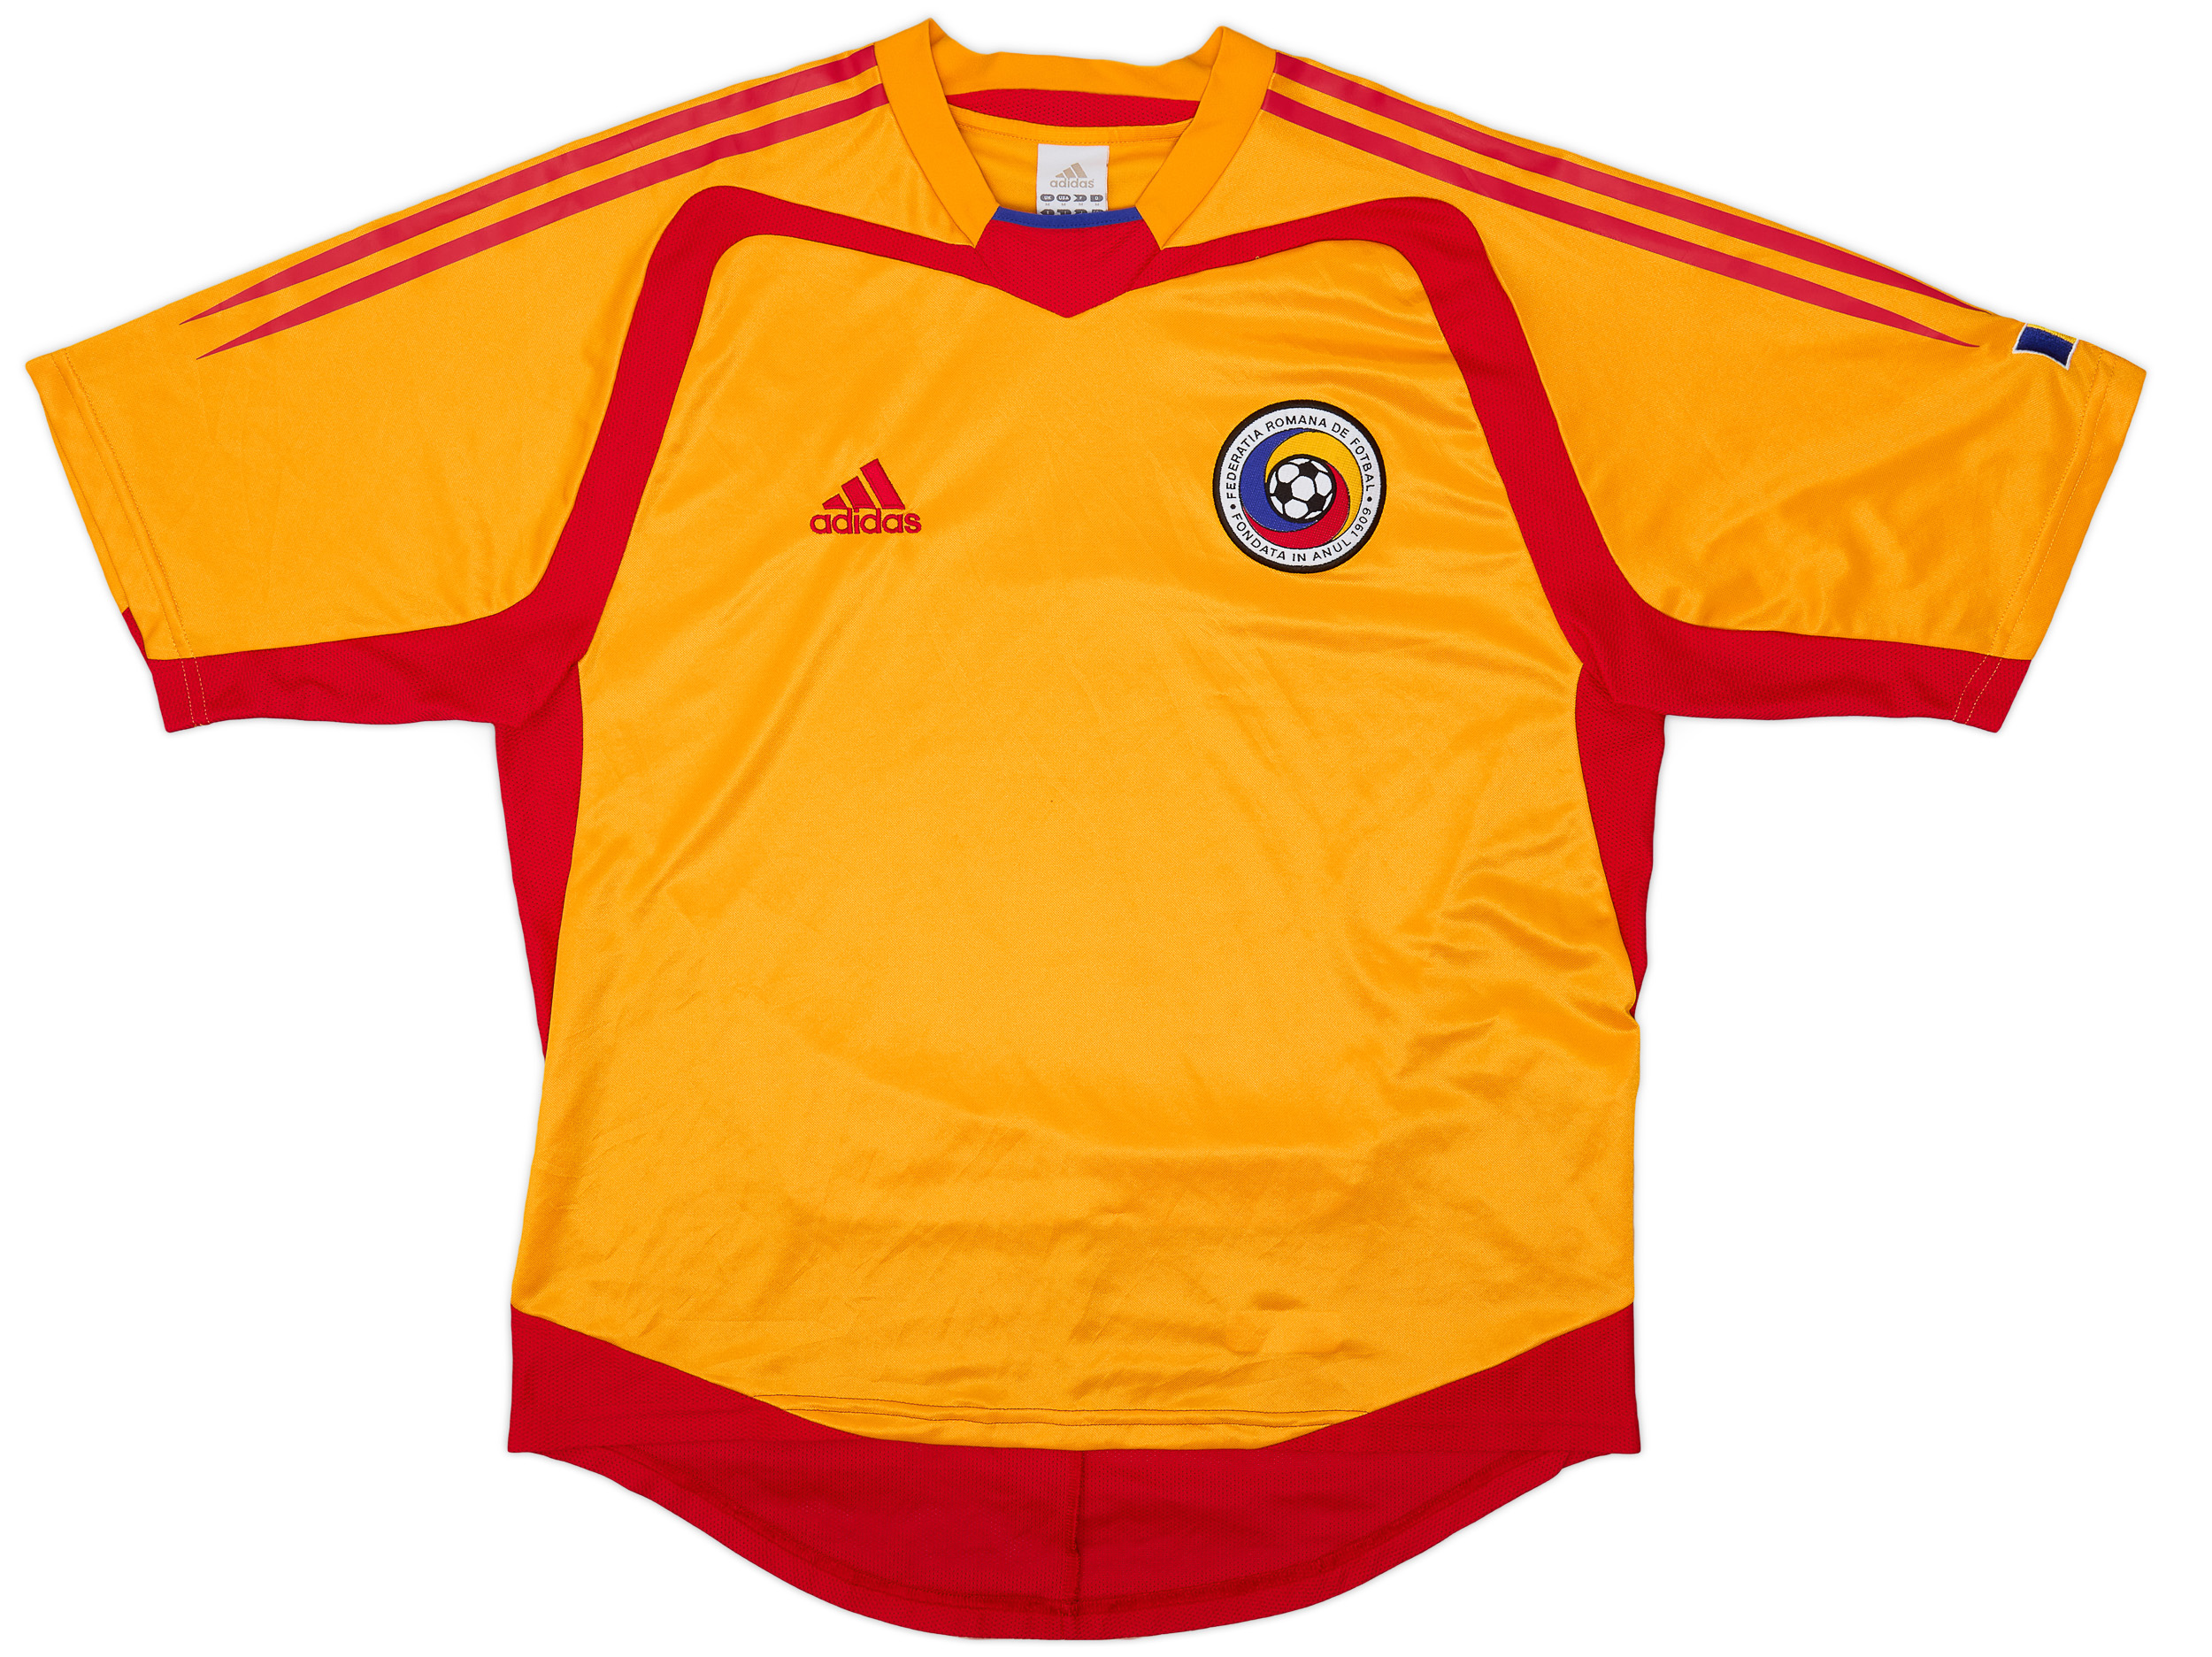 2004-06 Romania Home Shirt - 9/10 - ()